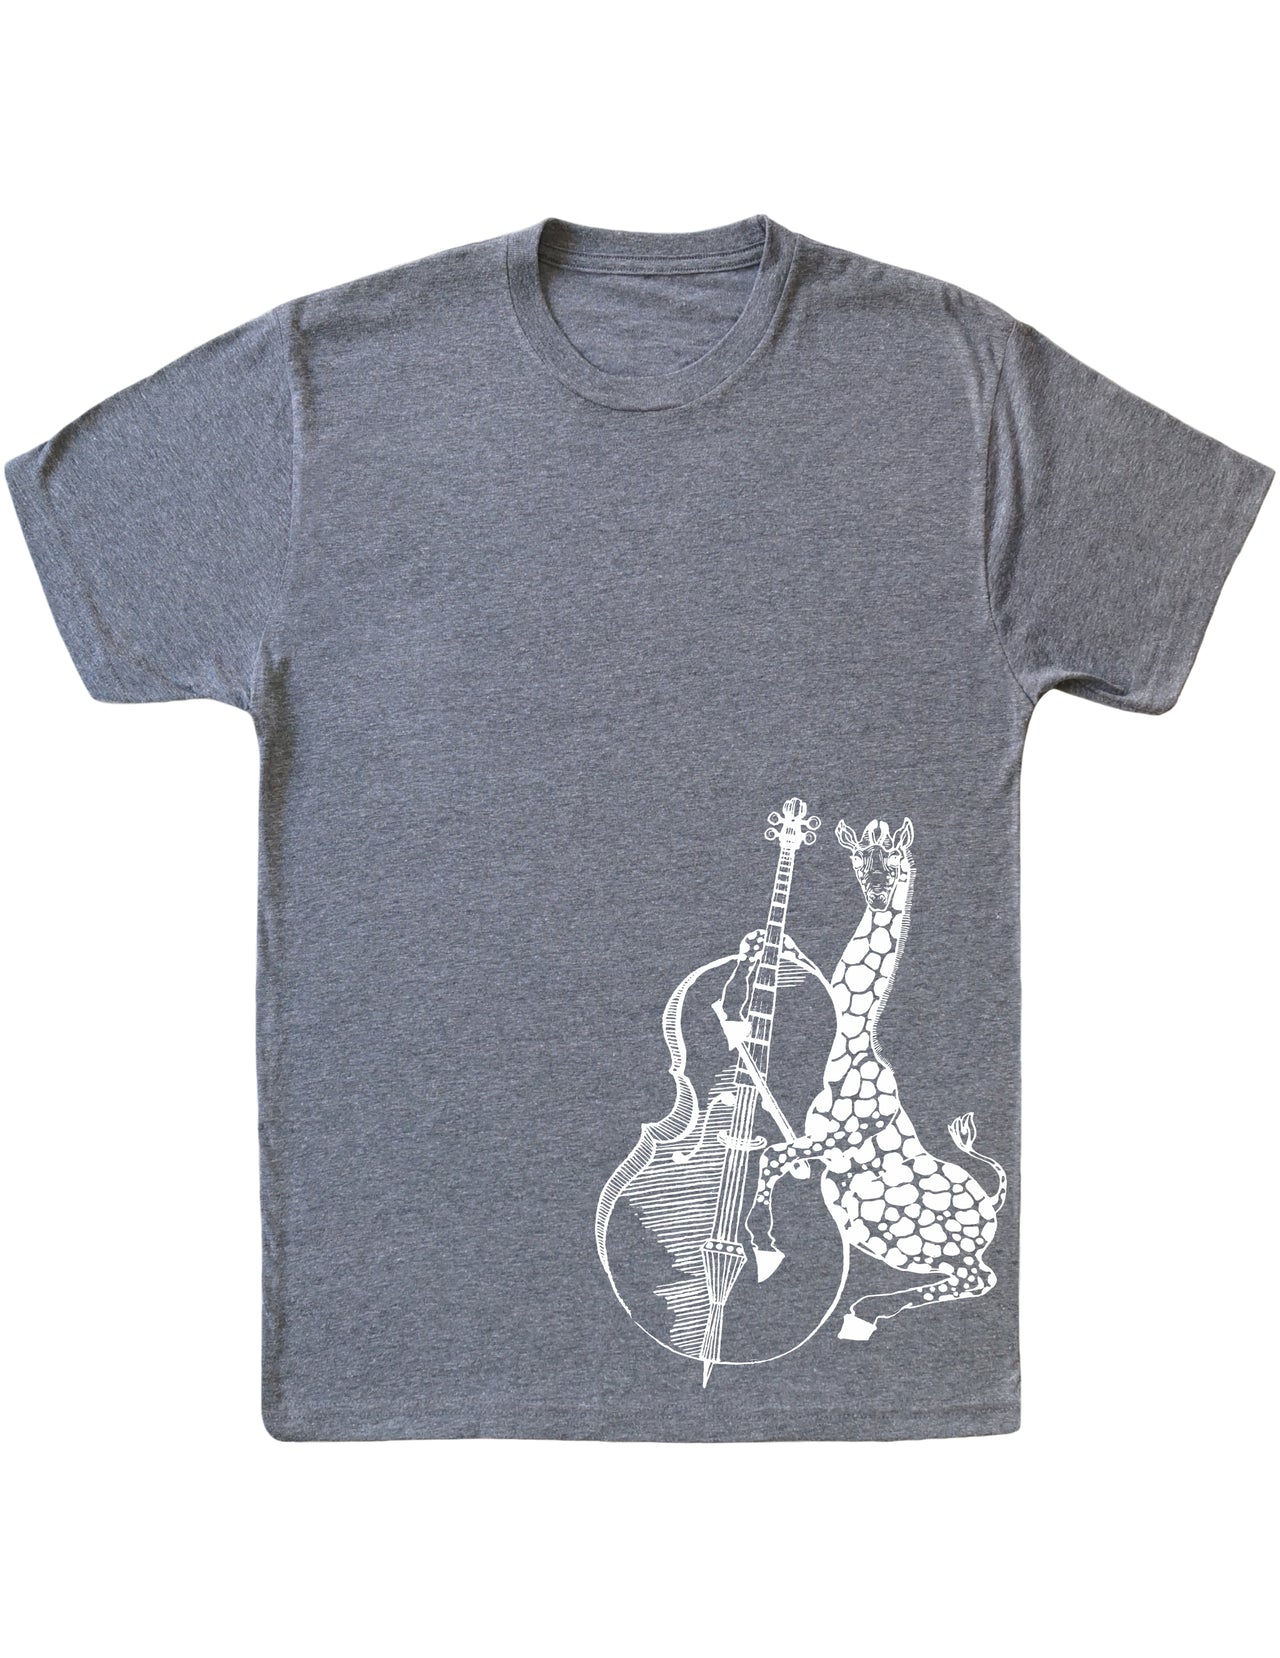 seembo-giraffe-playing-cello-cellist-musician-music-lover-vintage-grey-t-shirt